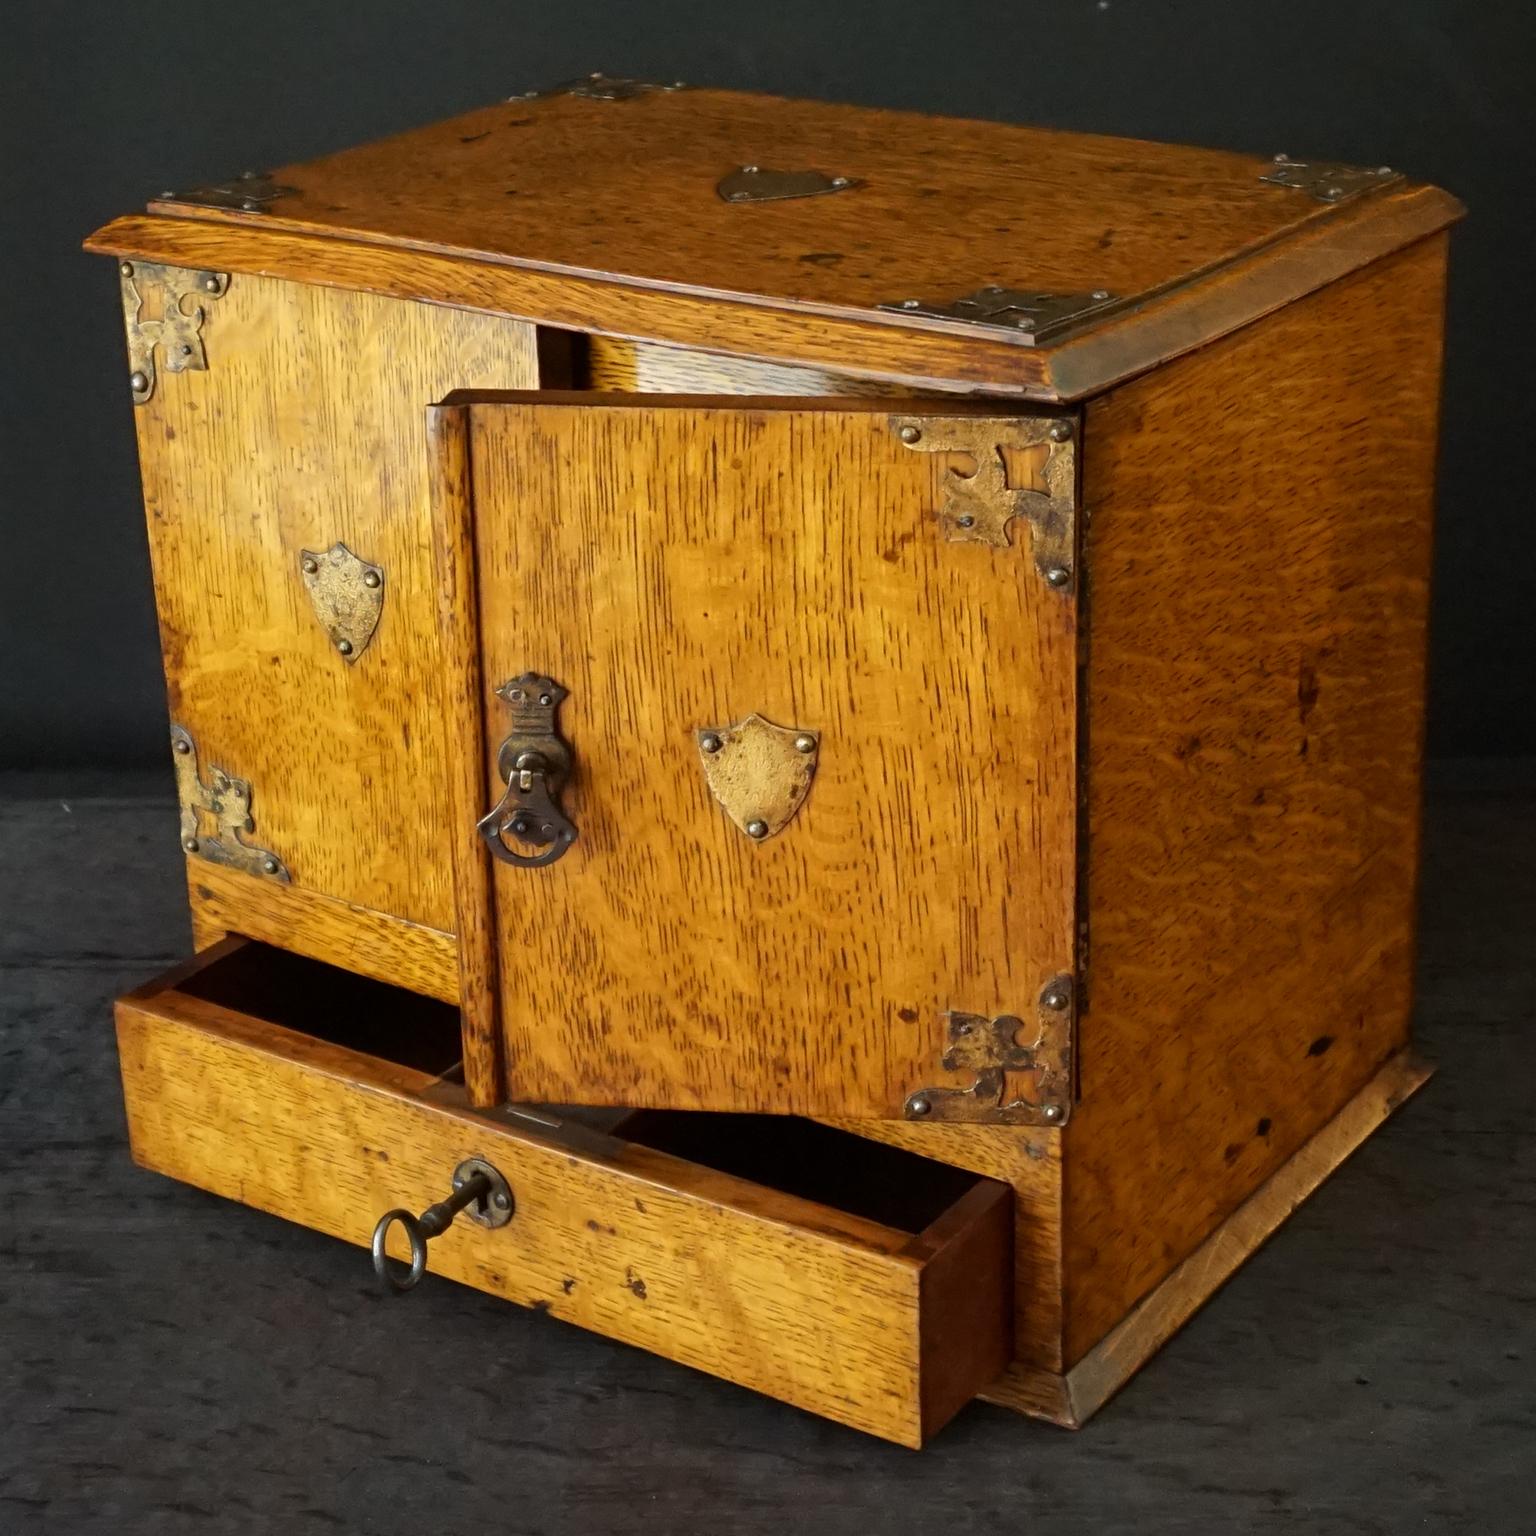 British 19th Century English Oak Cigar Humidor Box Cabinet with Cedar Interior Drawers